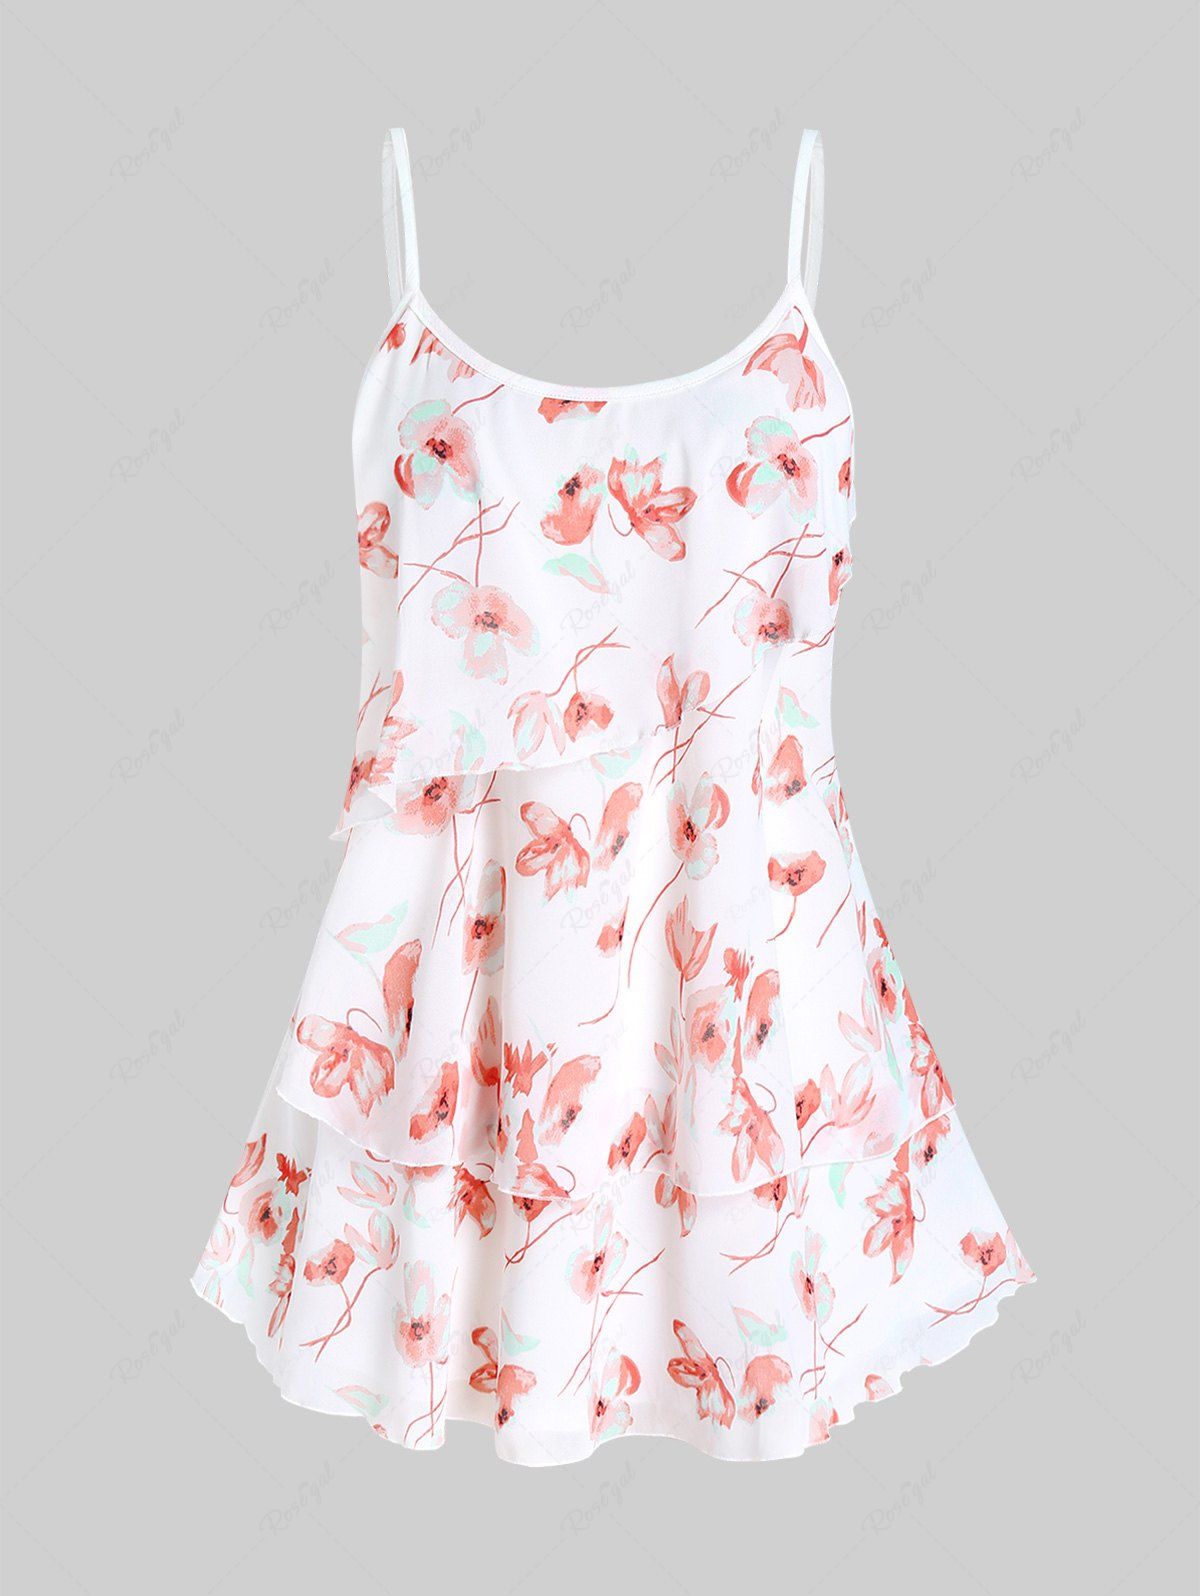 Fashion Plus Size Floral Print Layered Cami Top  